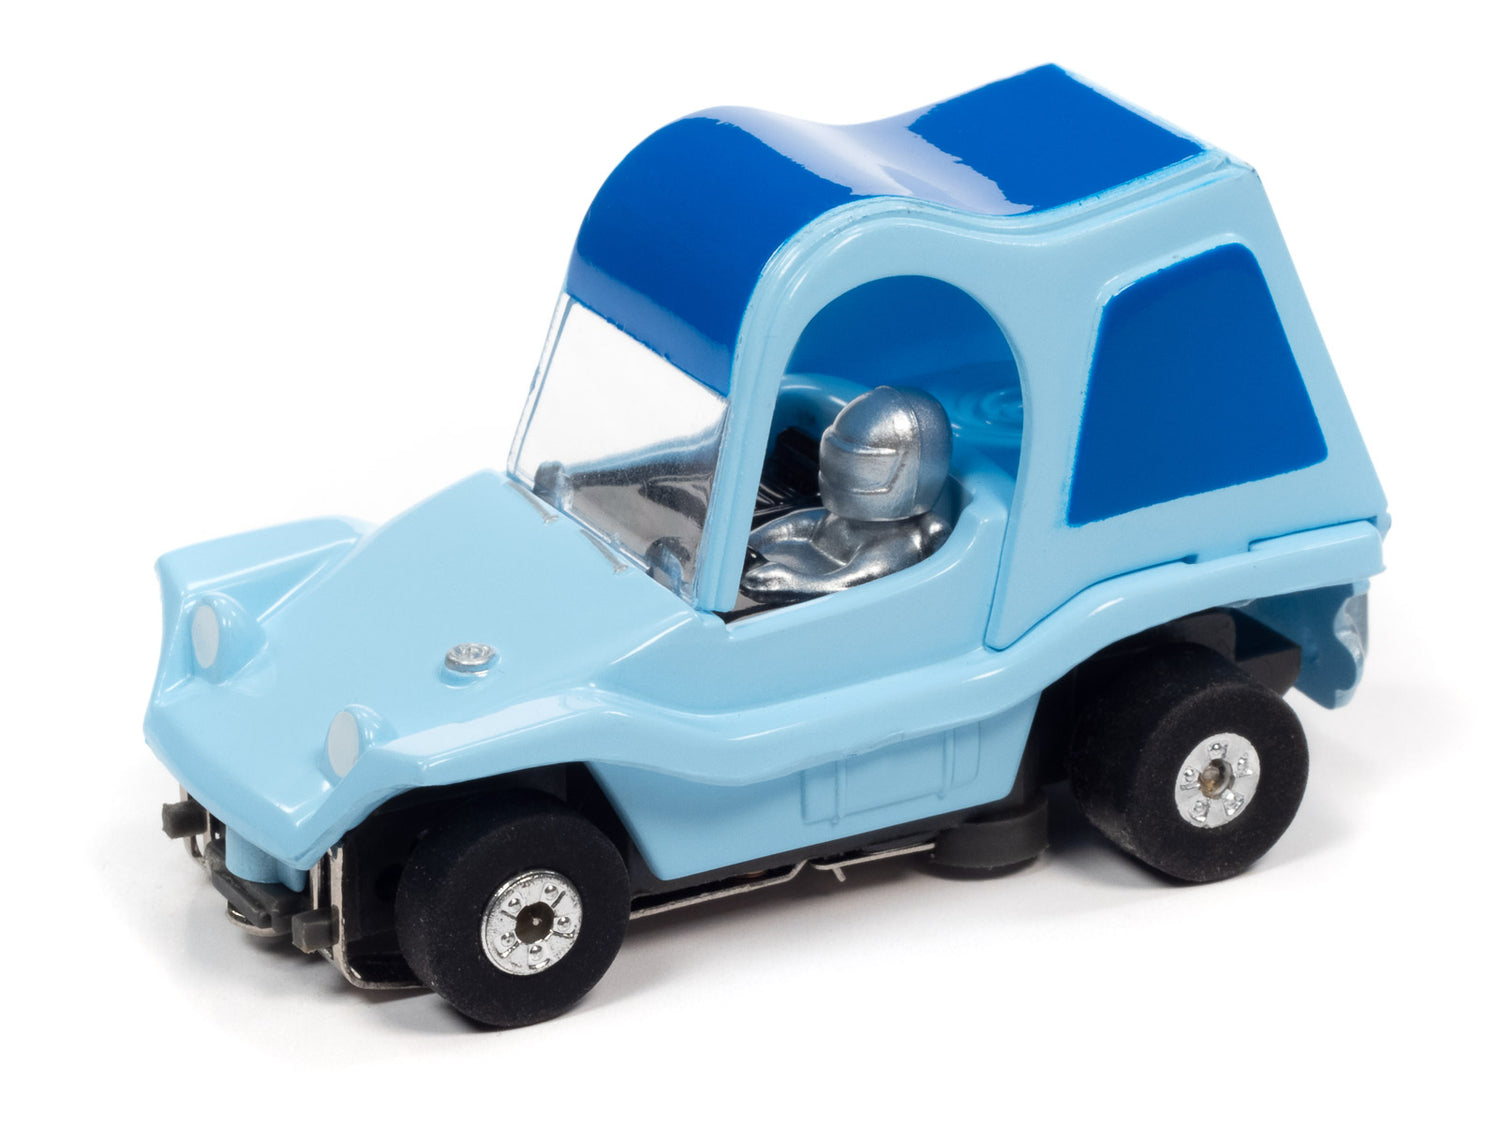 Auto World Thunderjet R34 Sand Van (Blue) HO Scale Slot Car